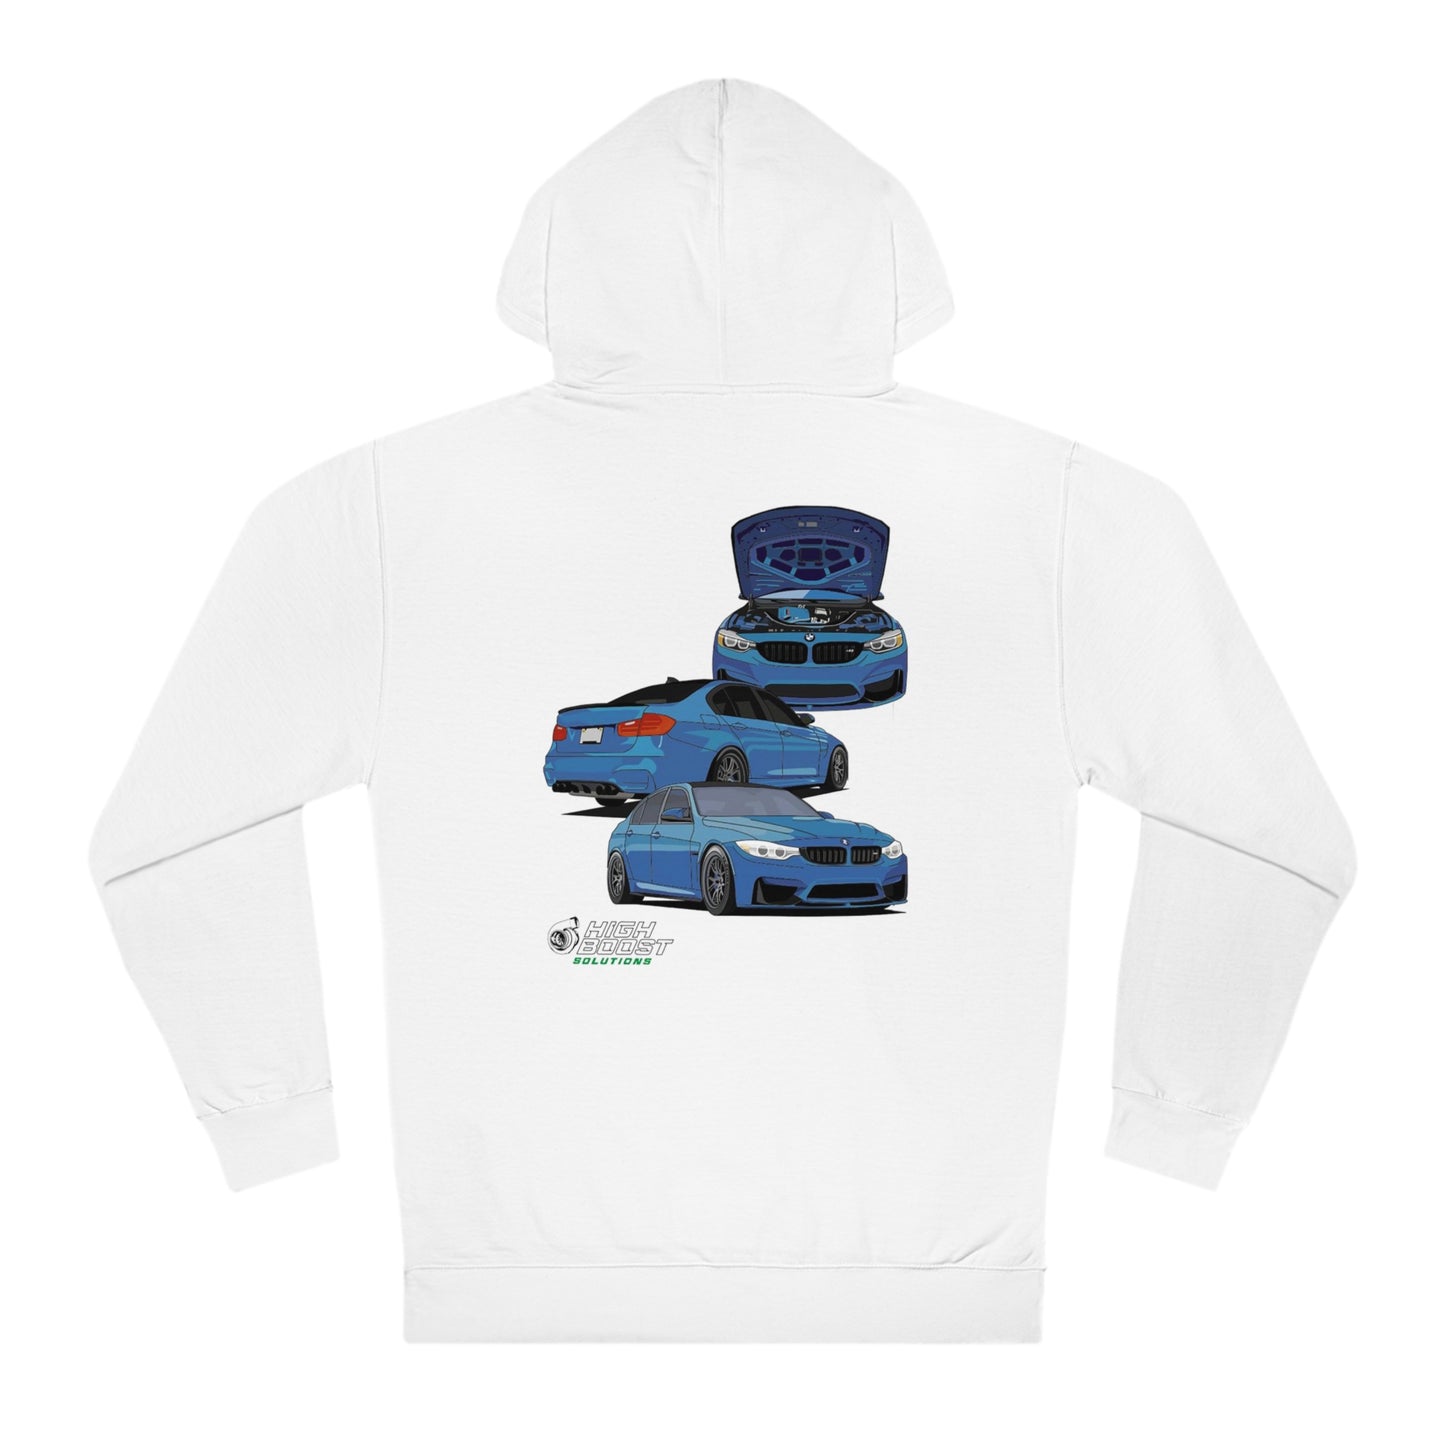 Unisex Hooded Sweatshirt our first design